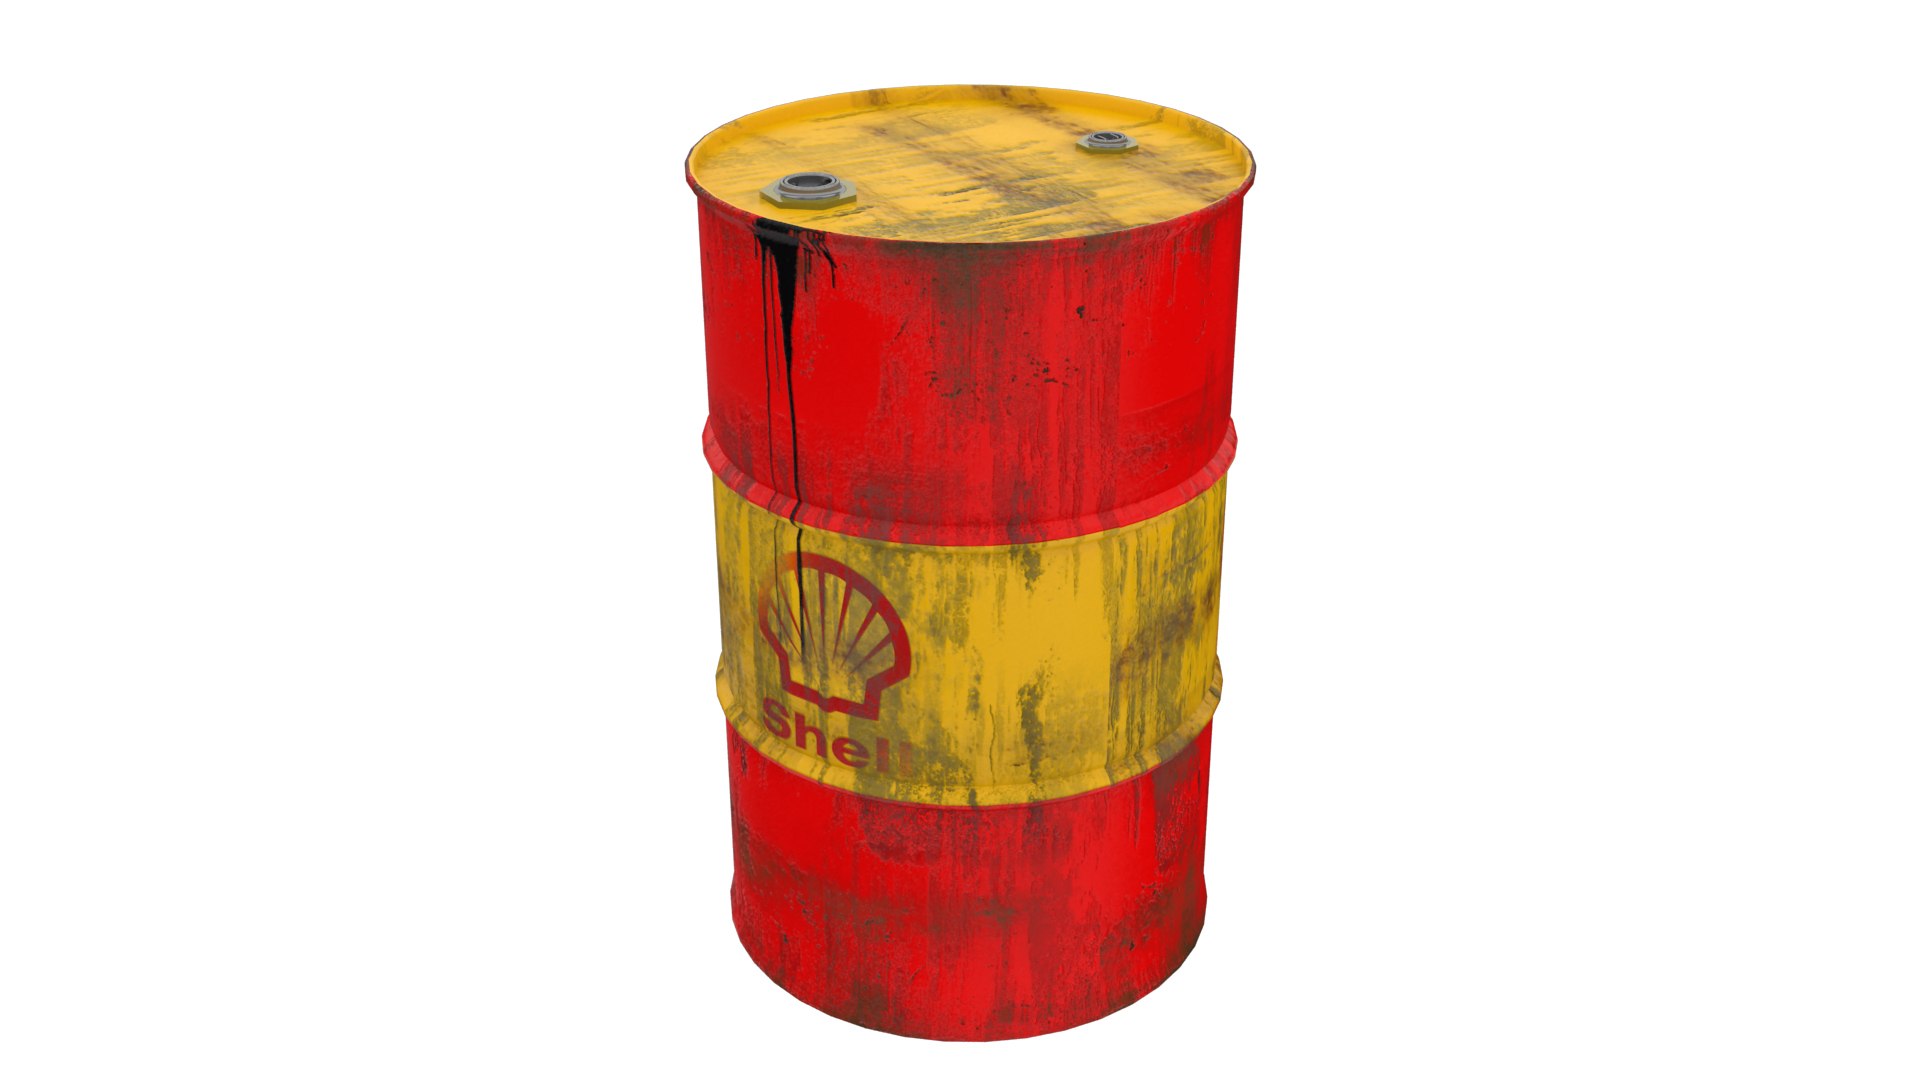 Shell oil barrel 3D model - TurboSquid 1617745